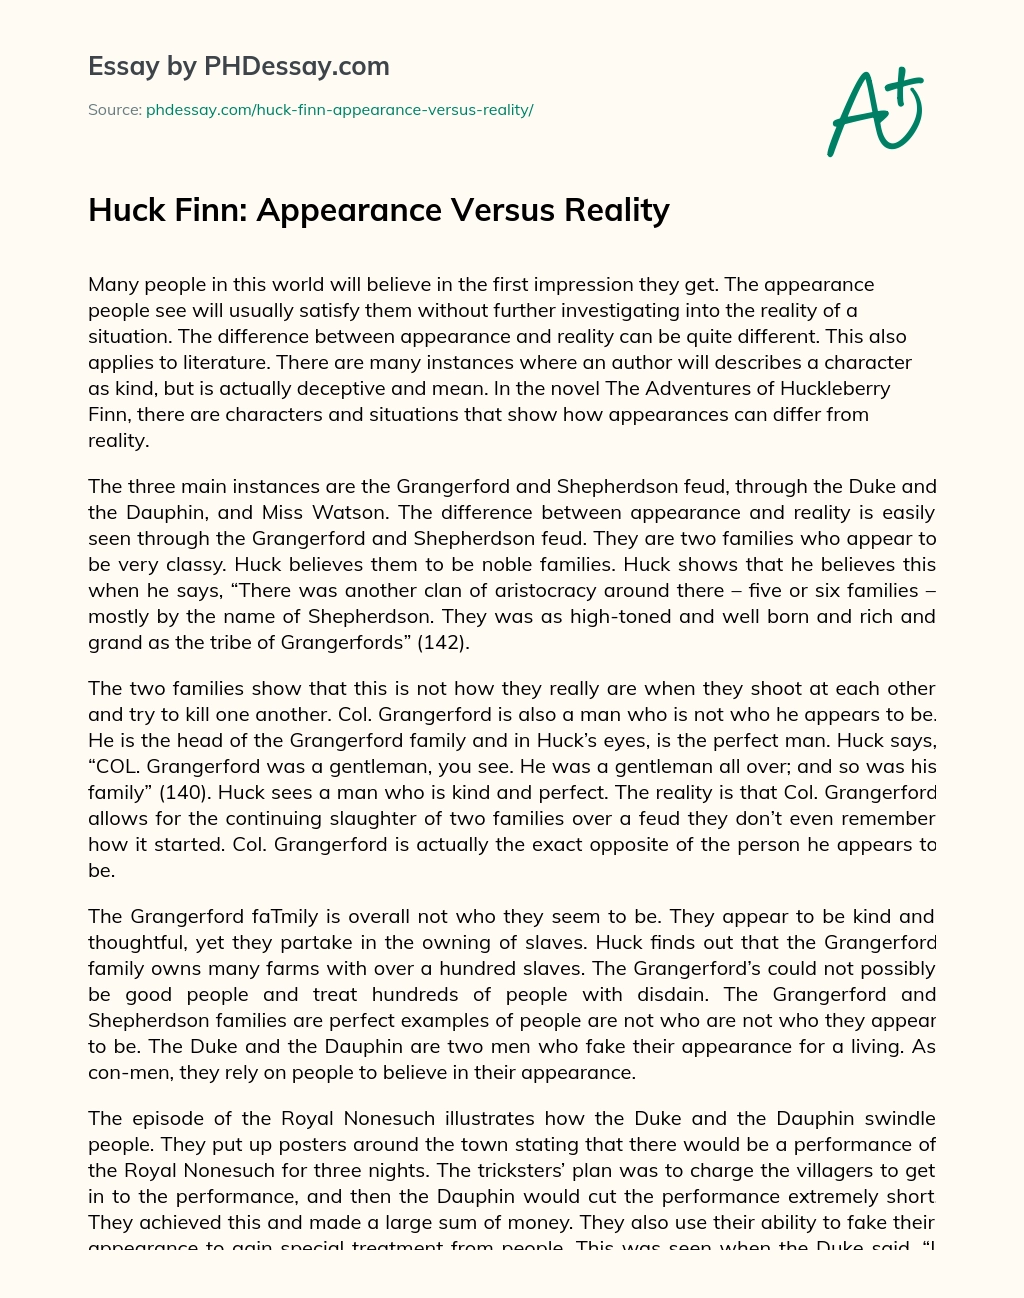 Huck Finn: Appearance Versus Reality essay